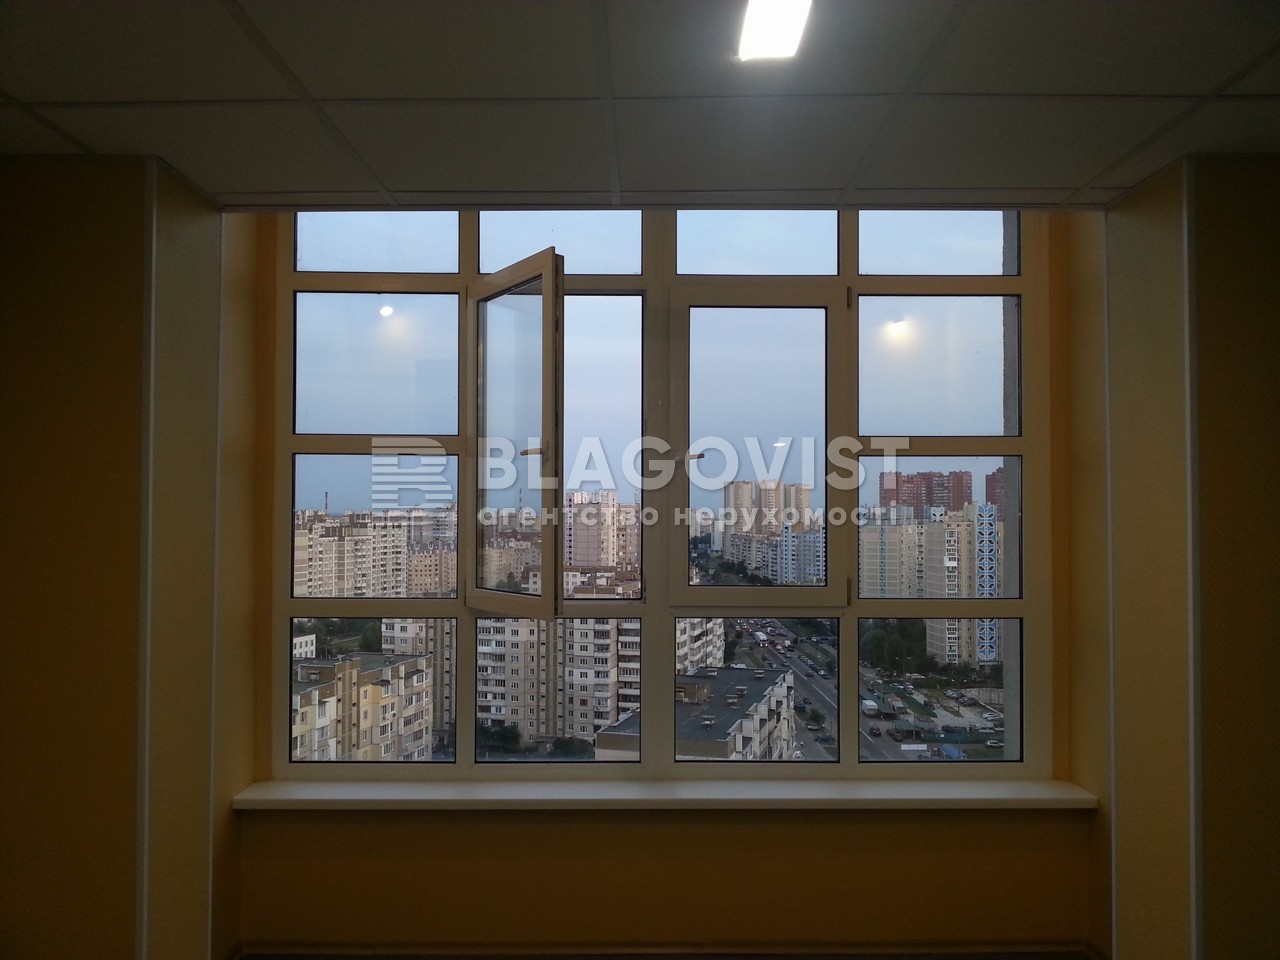  Офис, Z-55190, Драгоманова, Киев - Фото 10